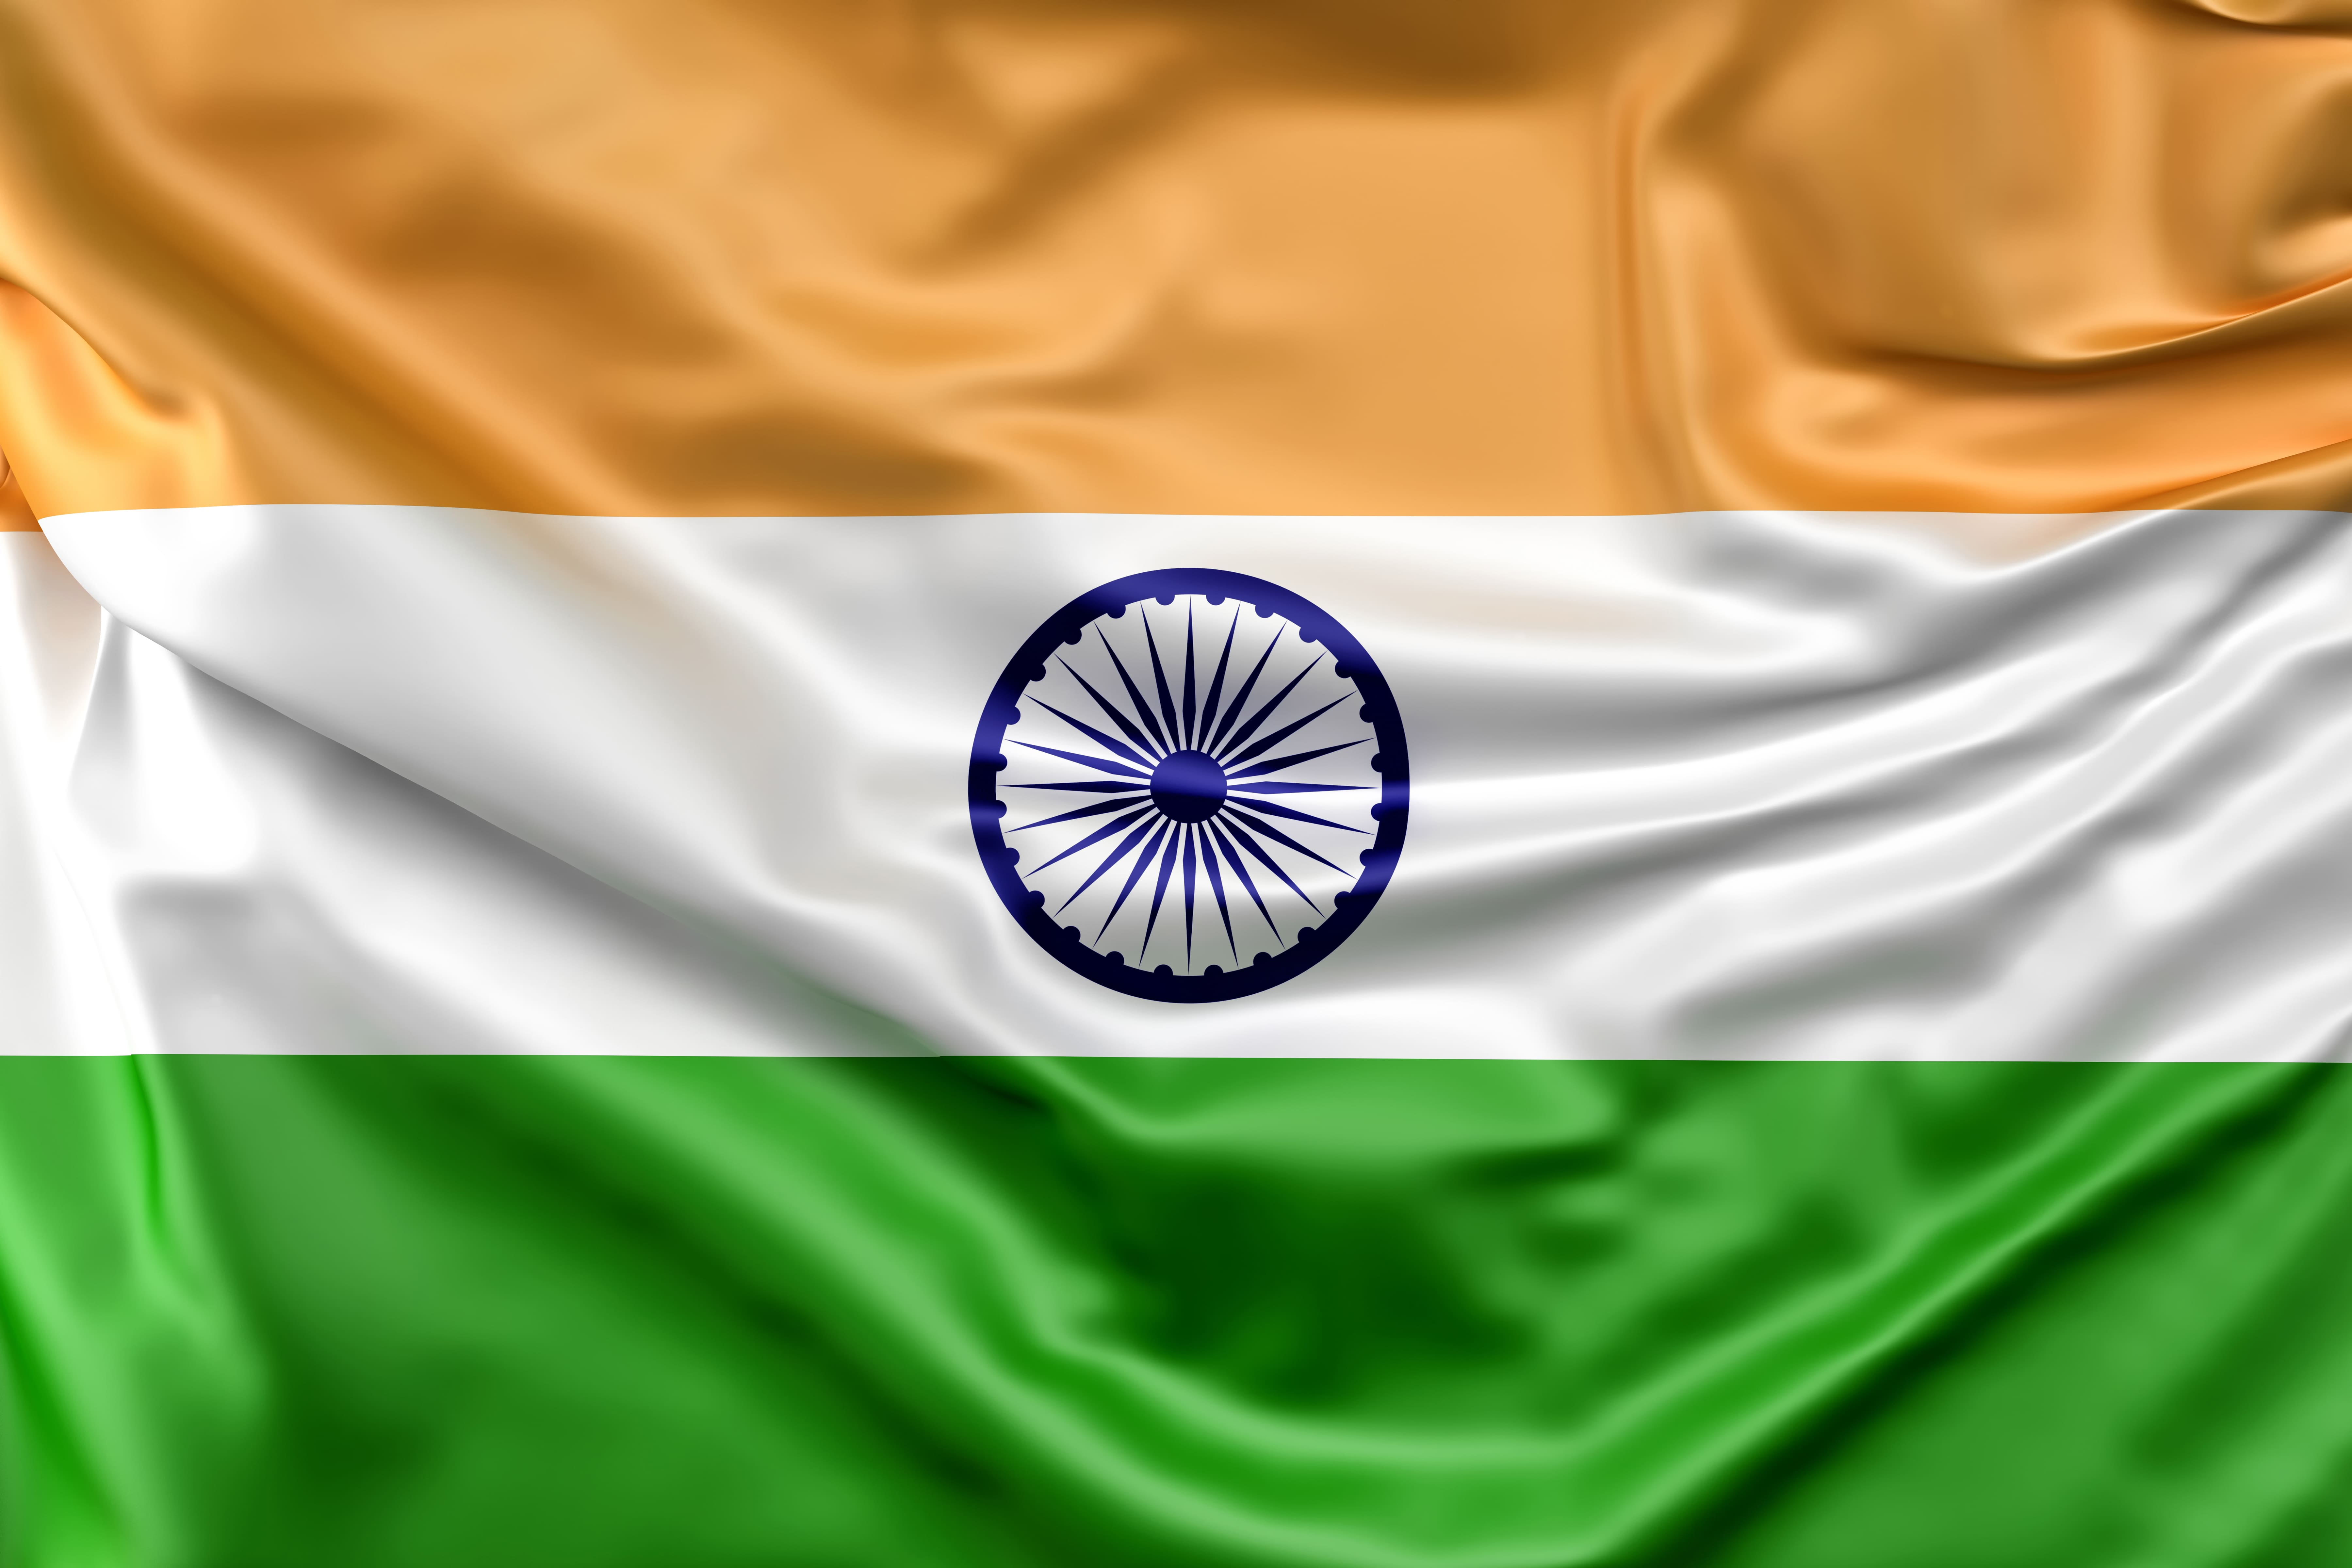 flag-of-india1.jpg - 601.97 kB